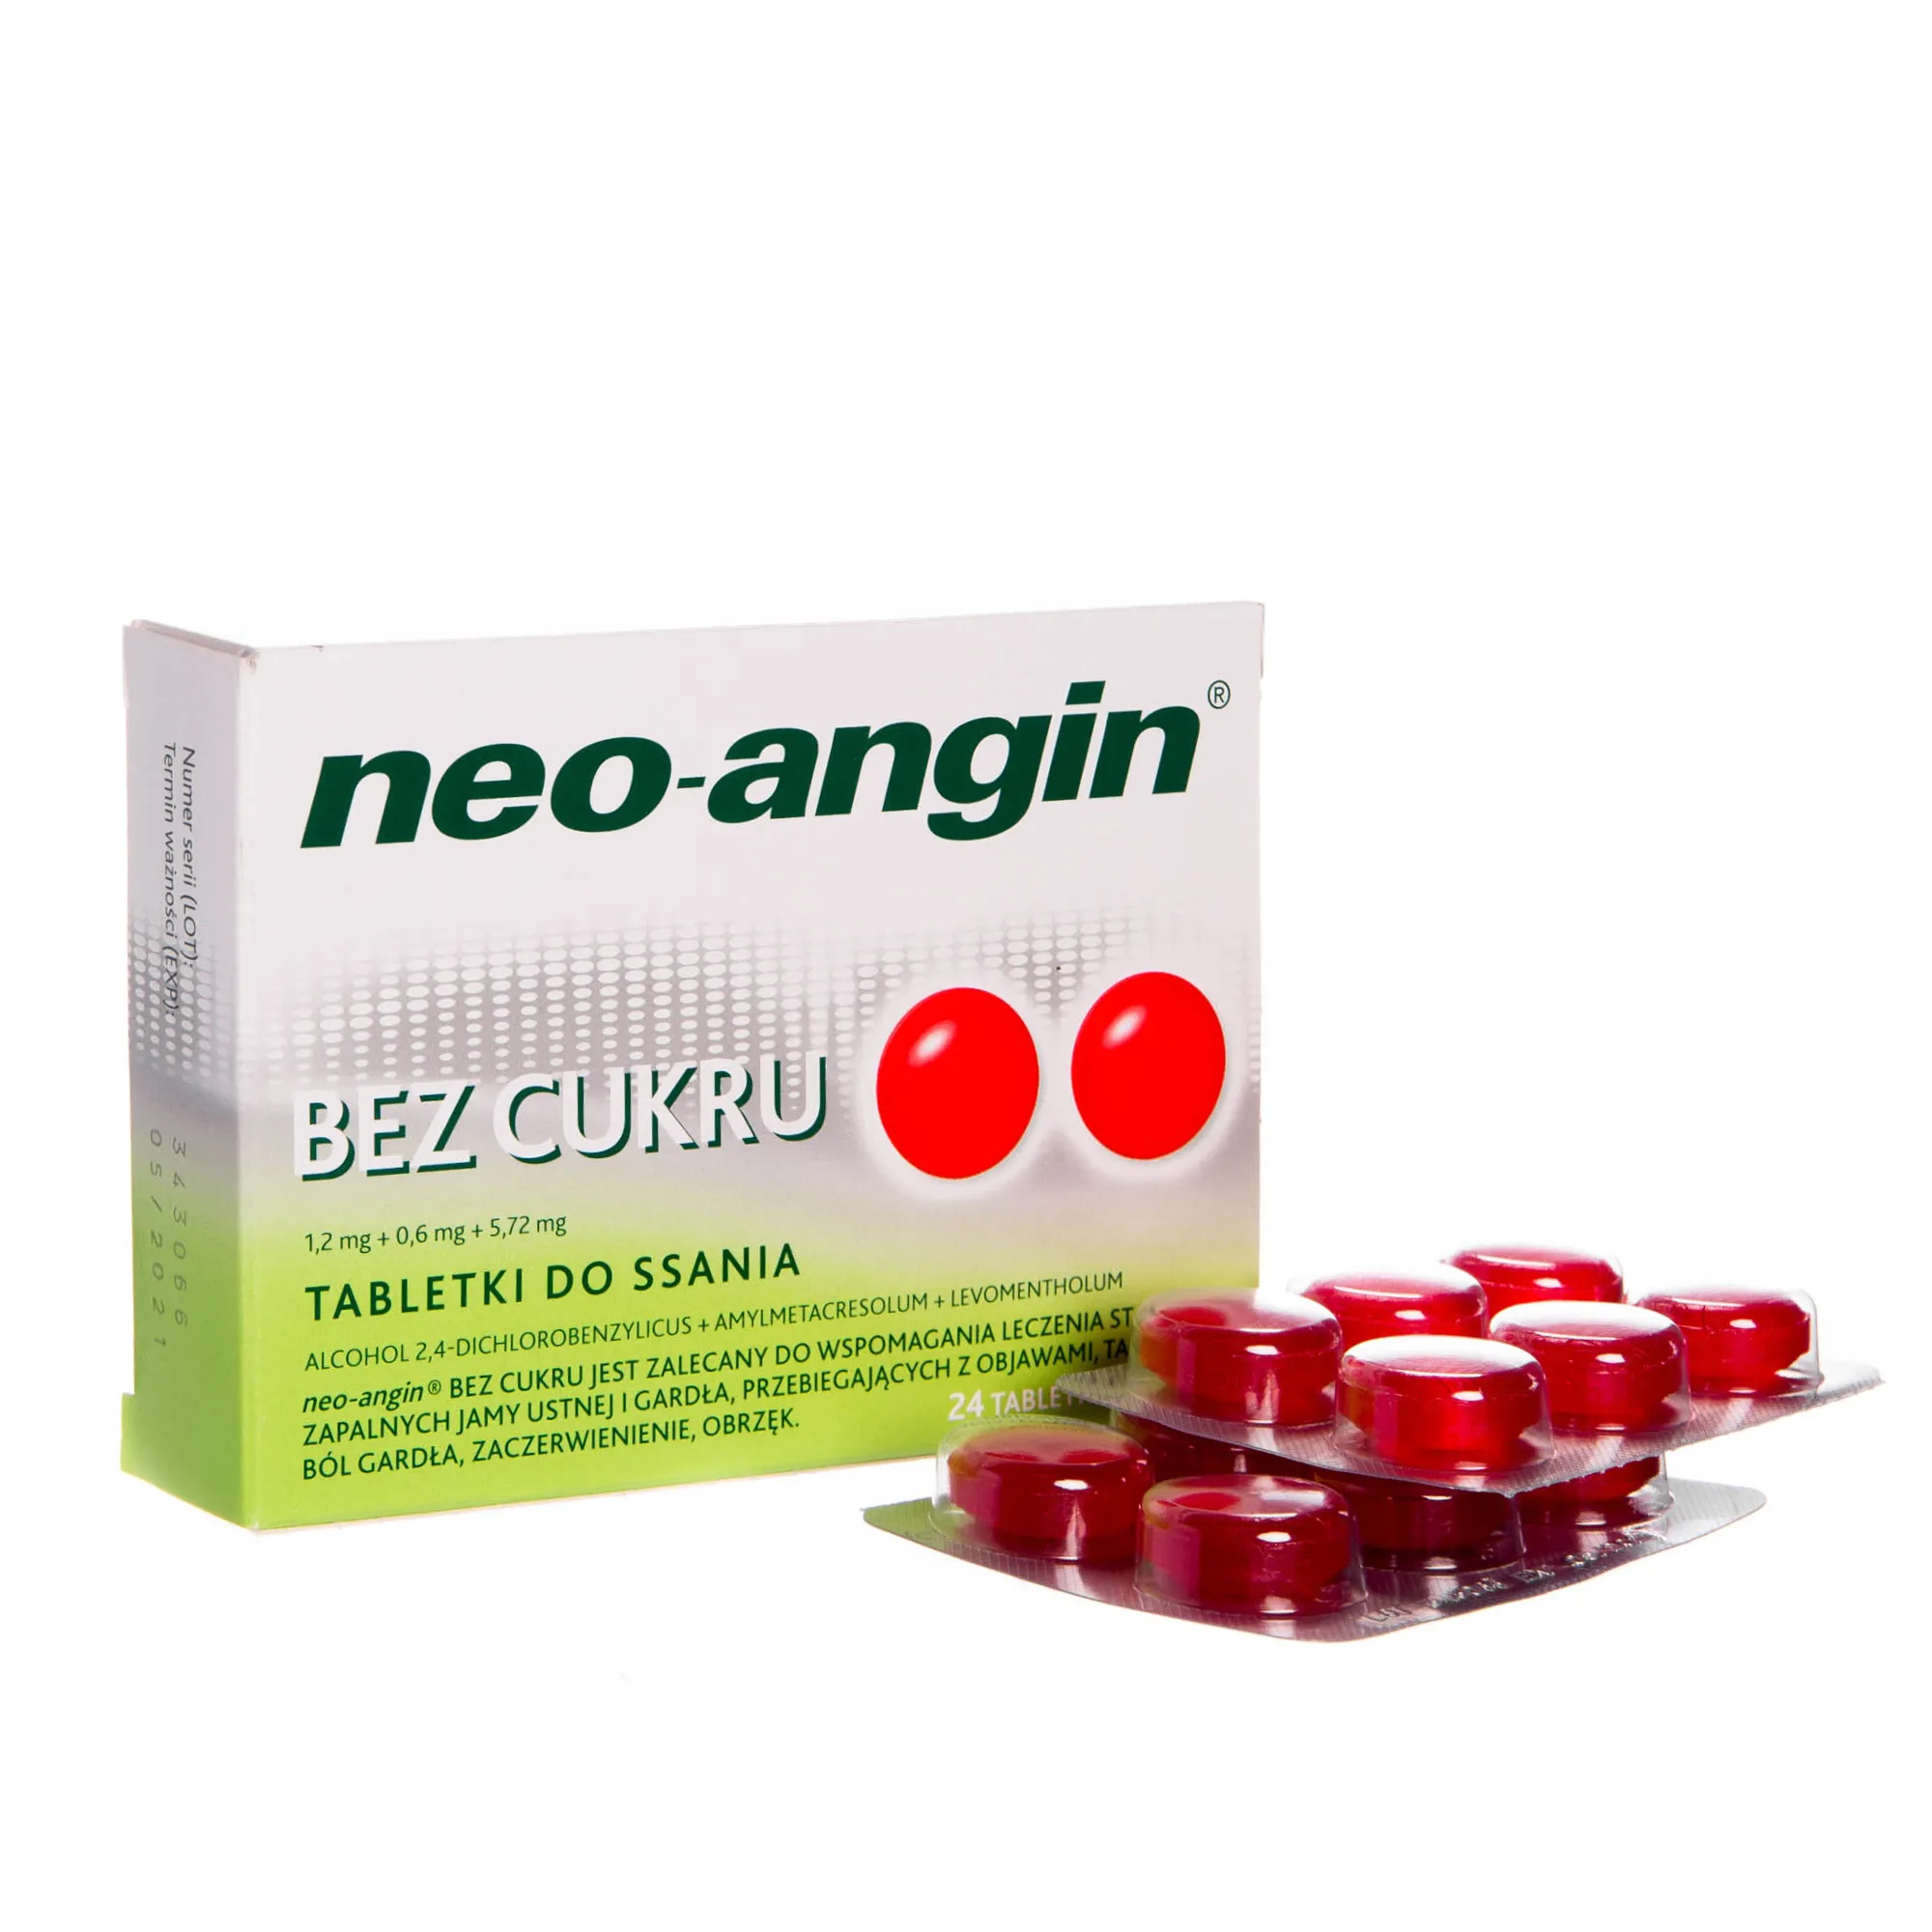 Neo-angin bez cukru, alcohol 2,4-dichlorobenzylicus + amylmetacresolum + levomentholum, ( 1,2 mg + 0.6 mg + 5,72 mg ), 24 tabletki do ssania